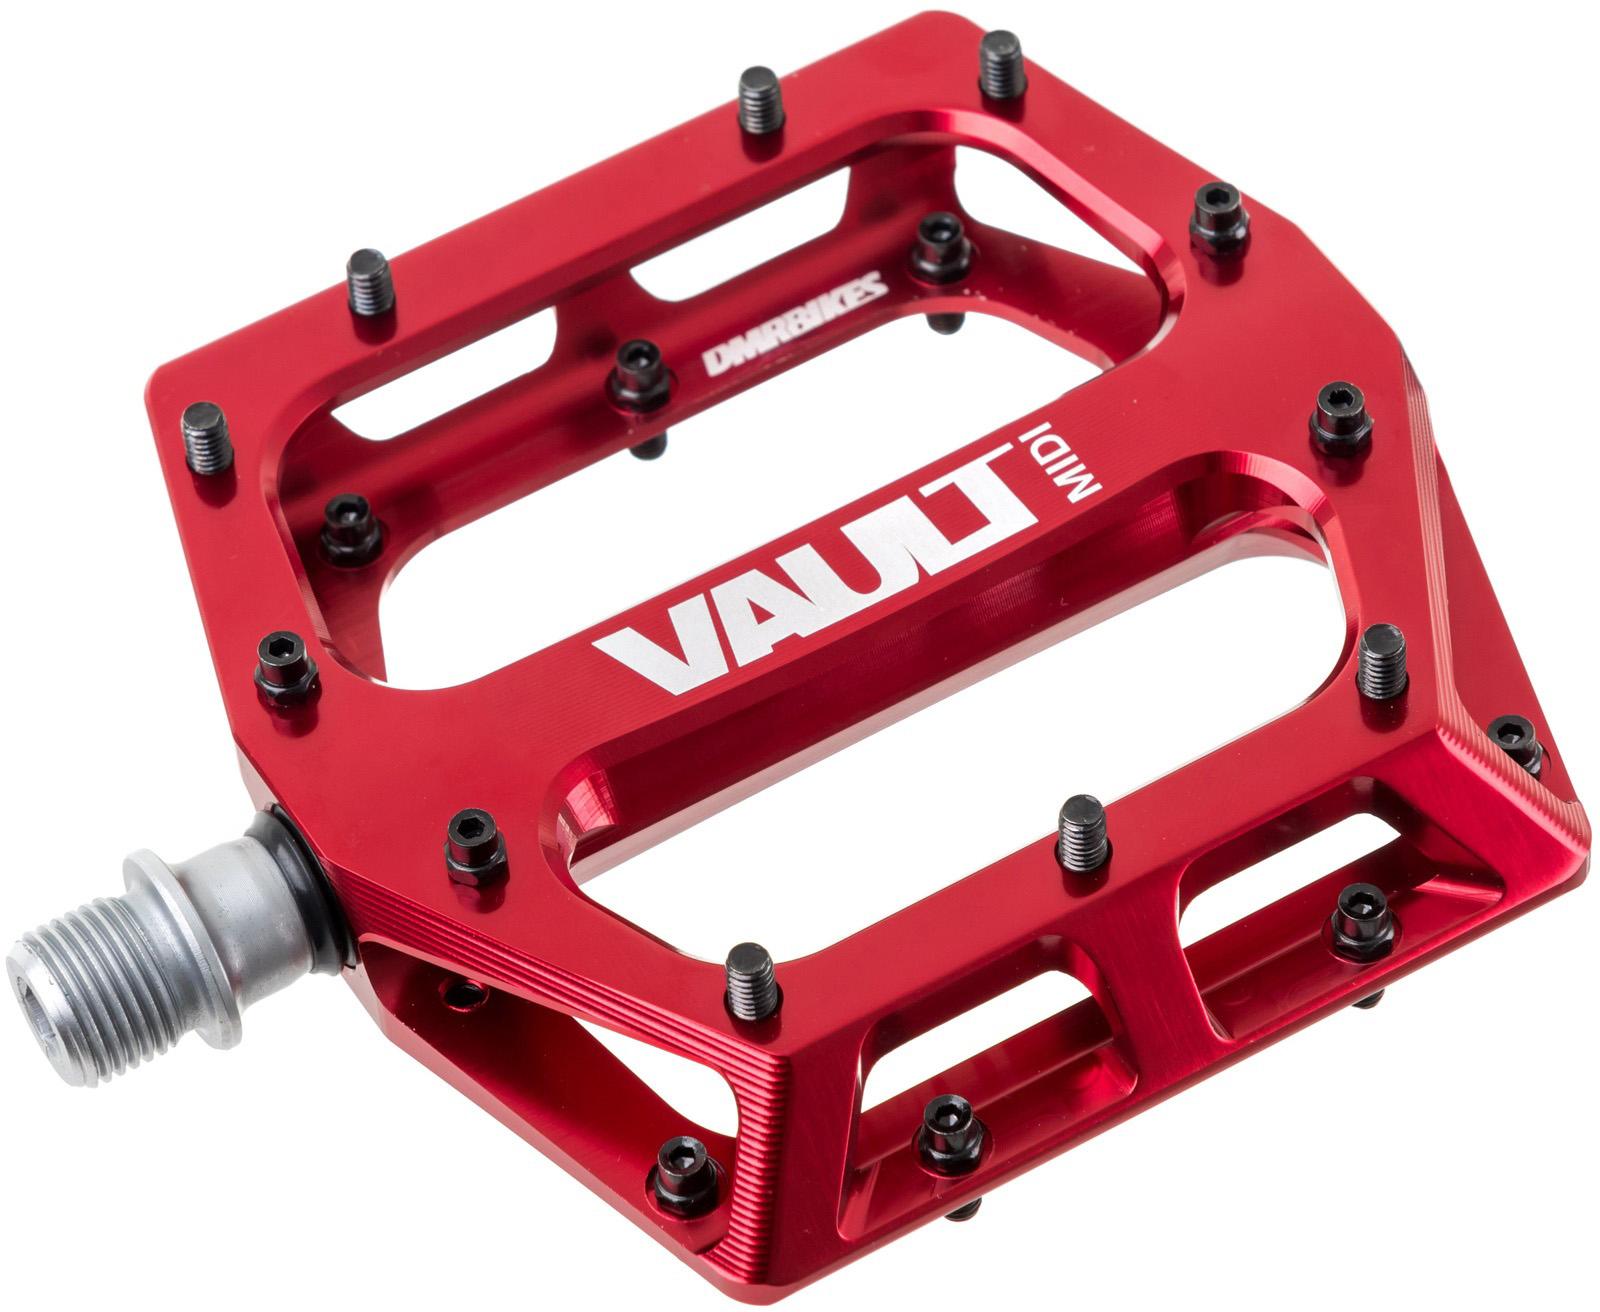 Dmr Vault Midi V2 Pedals - Red